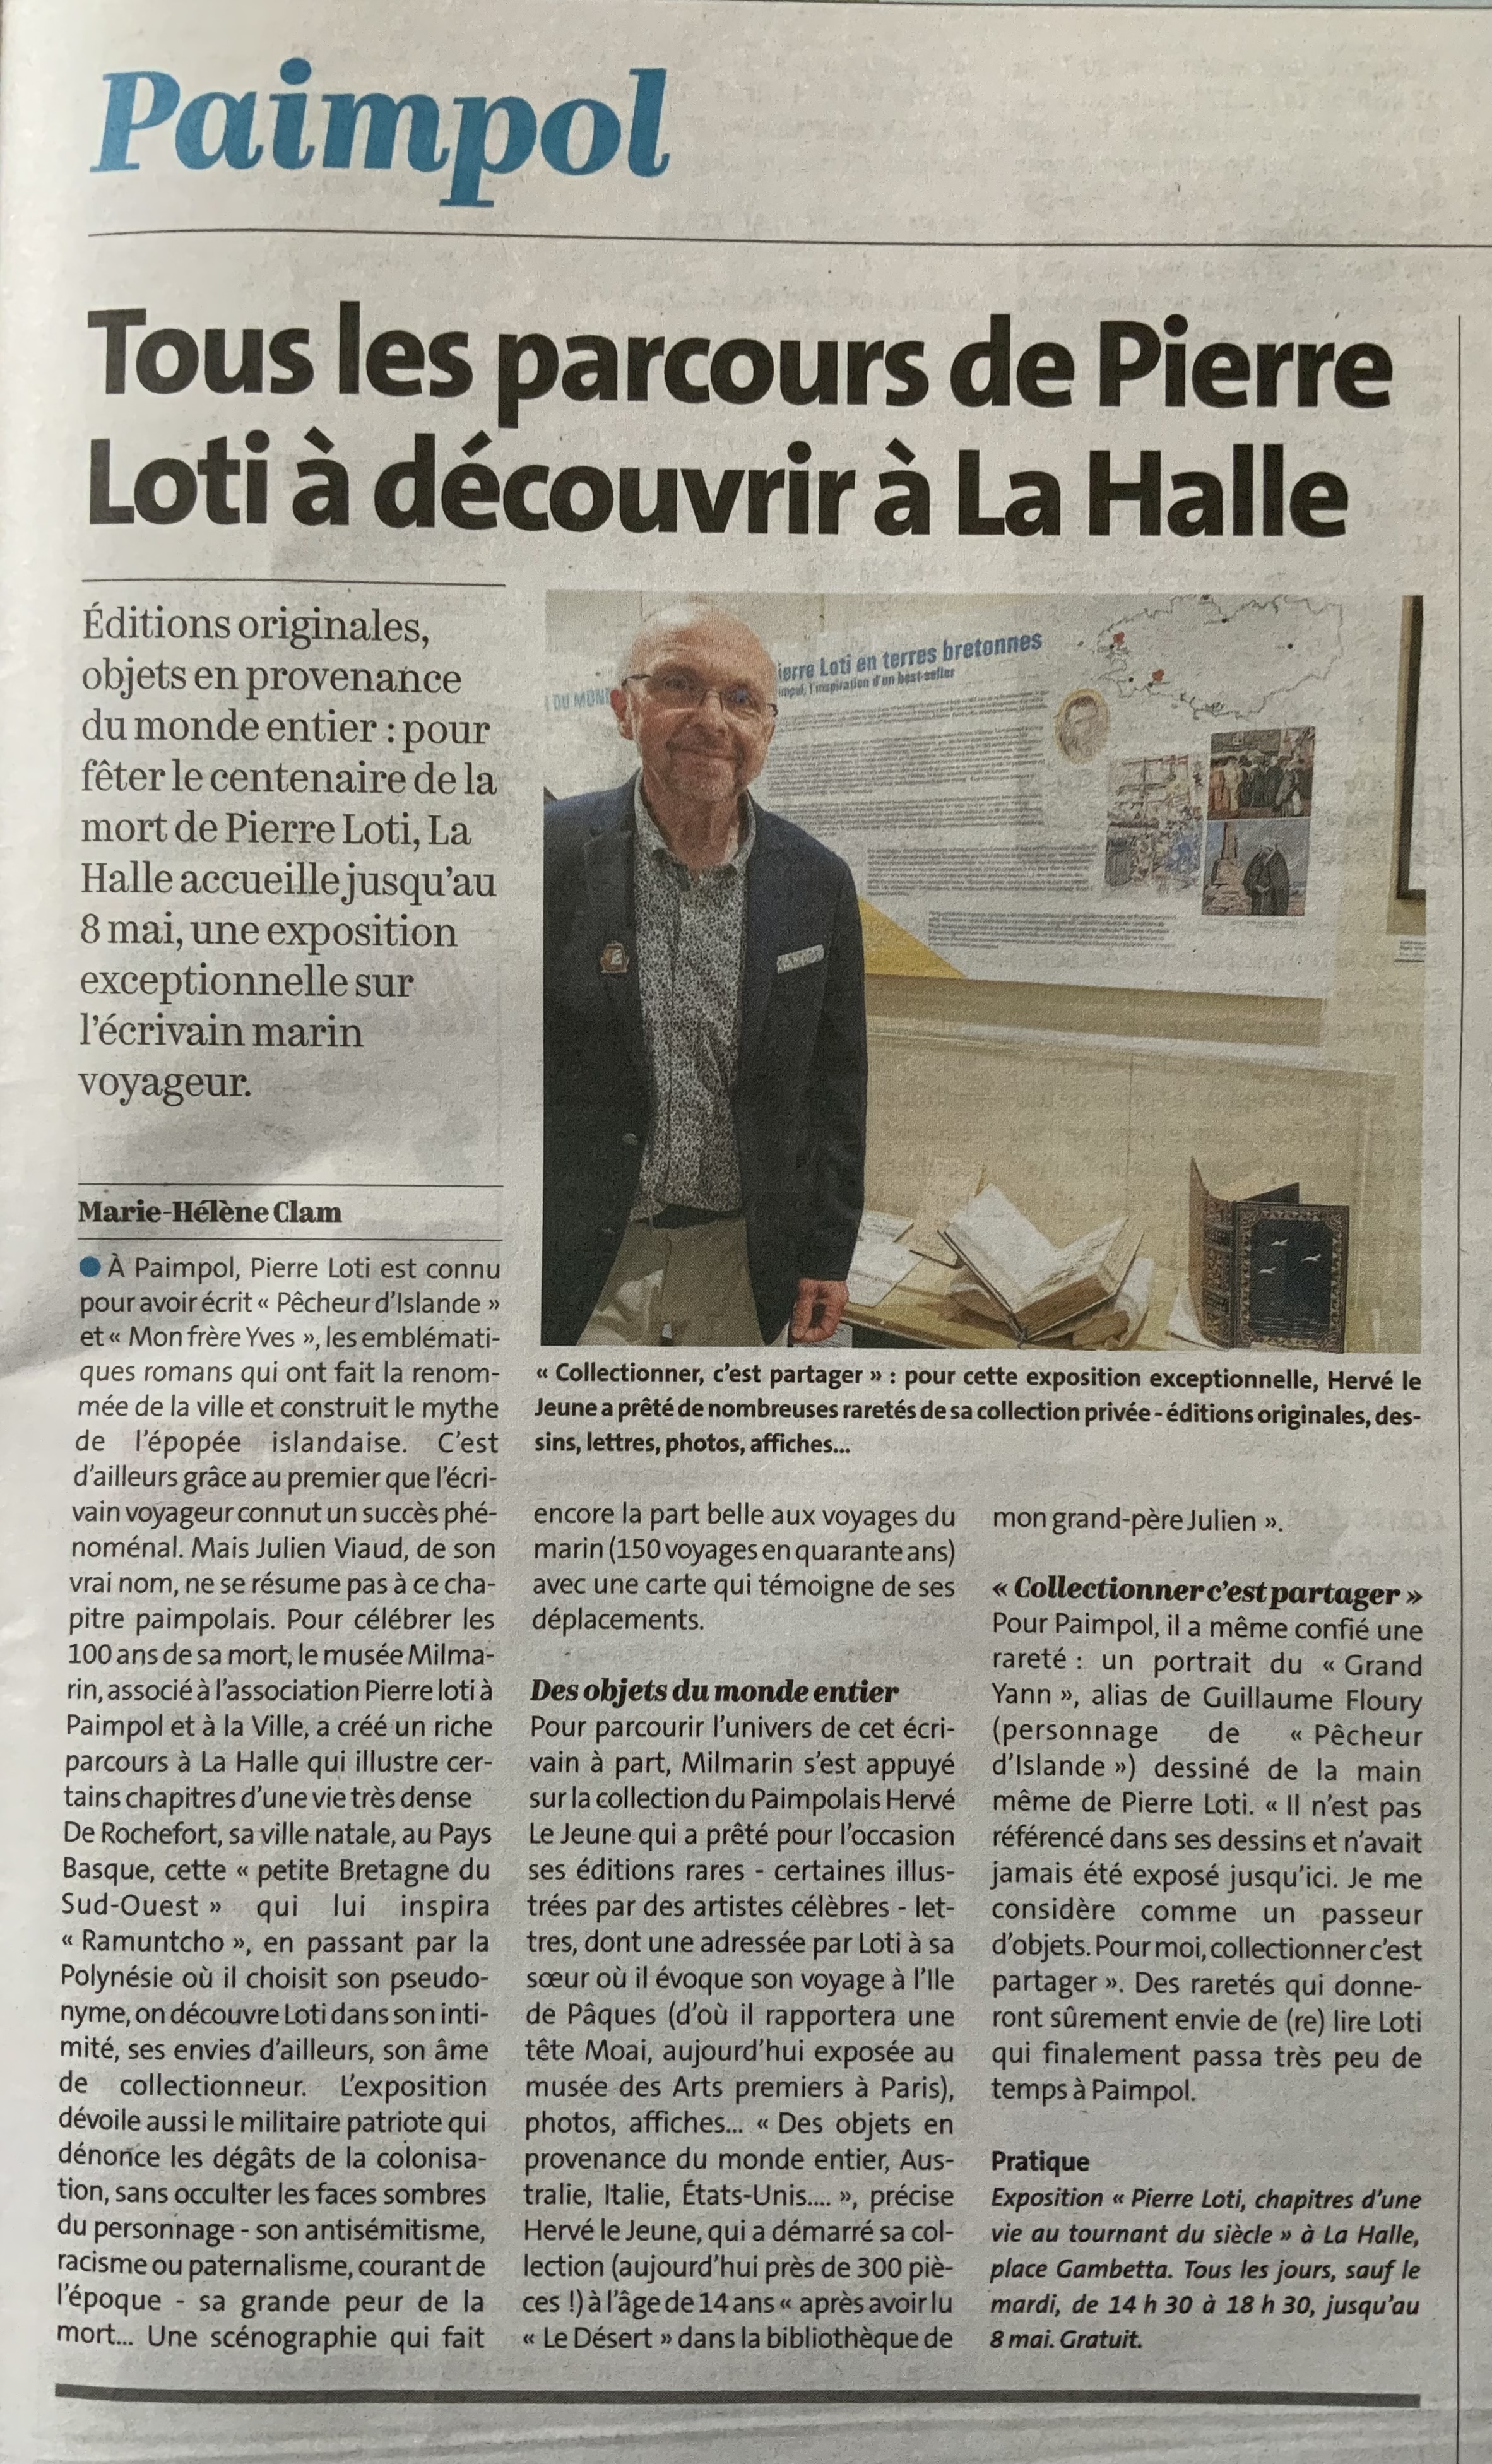 Expo Hervé Le Jeune-